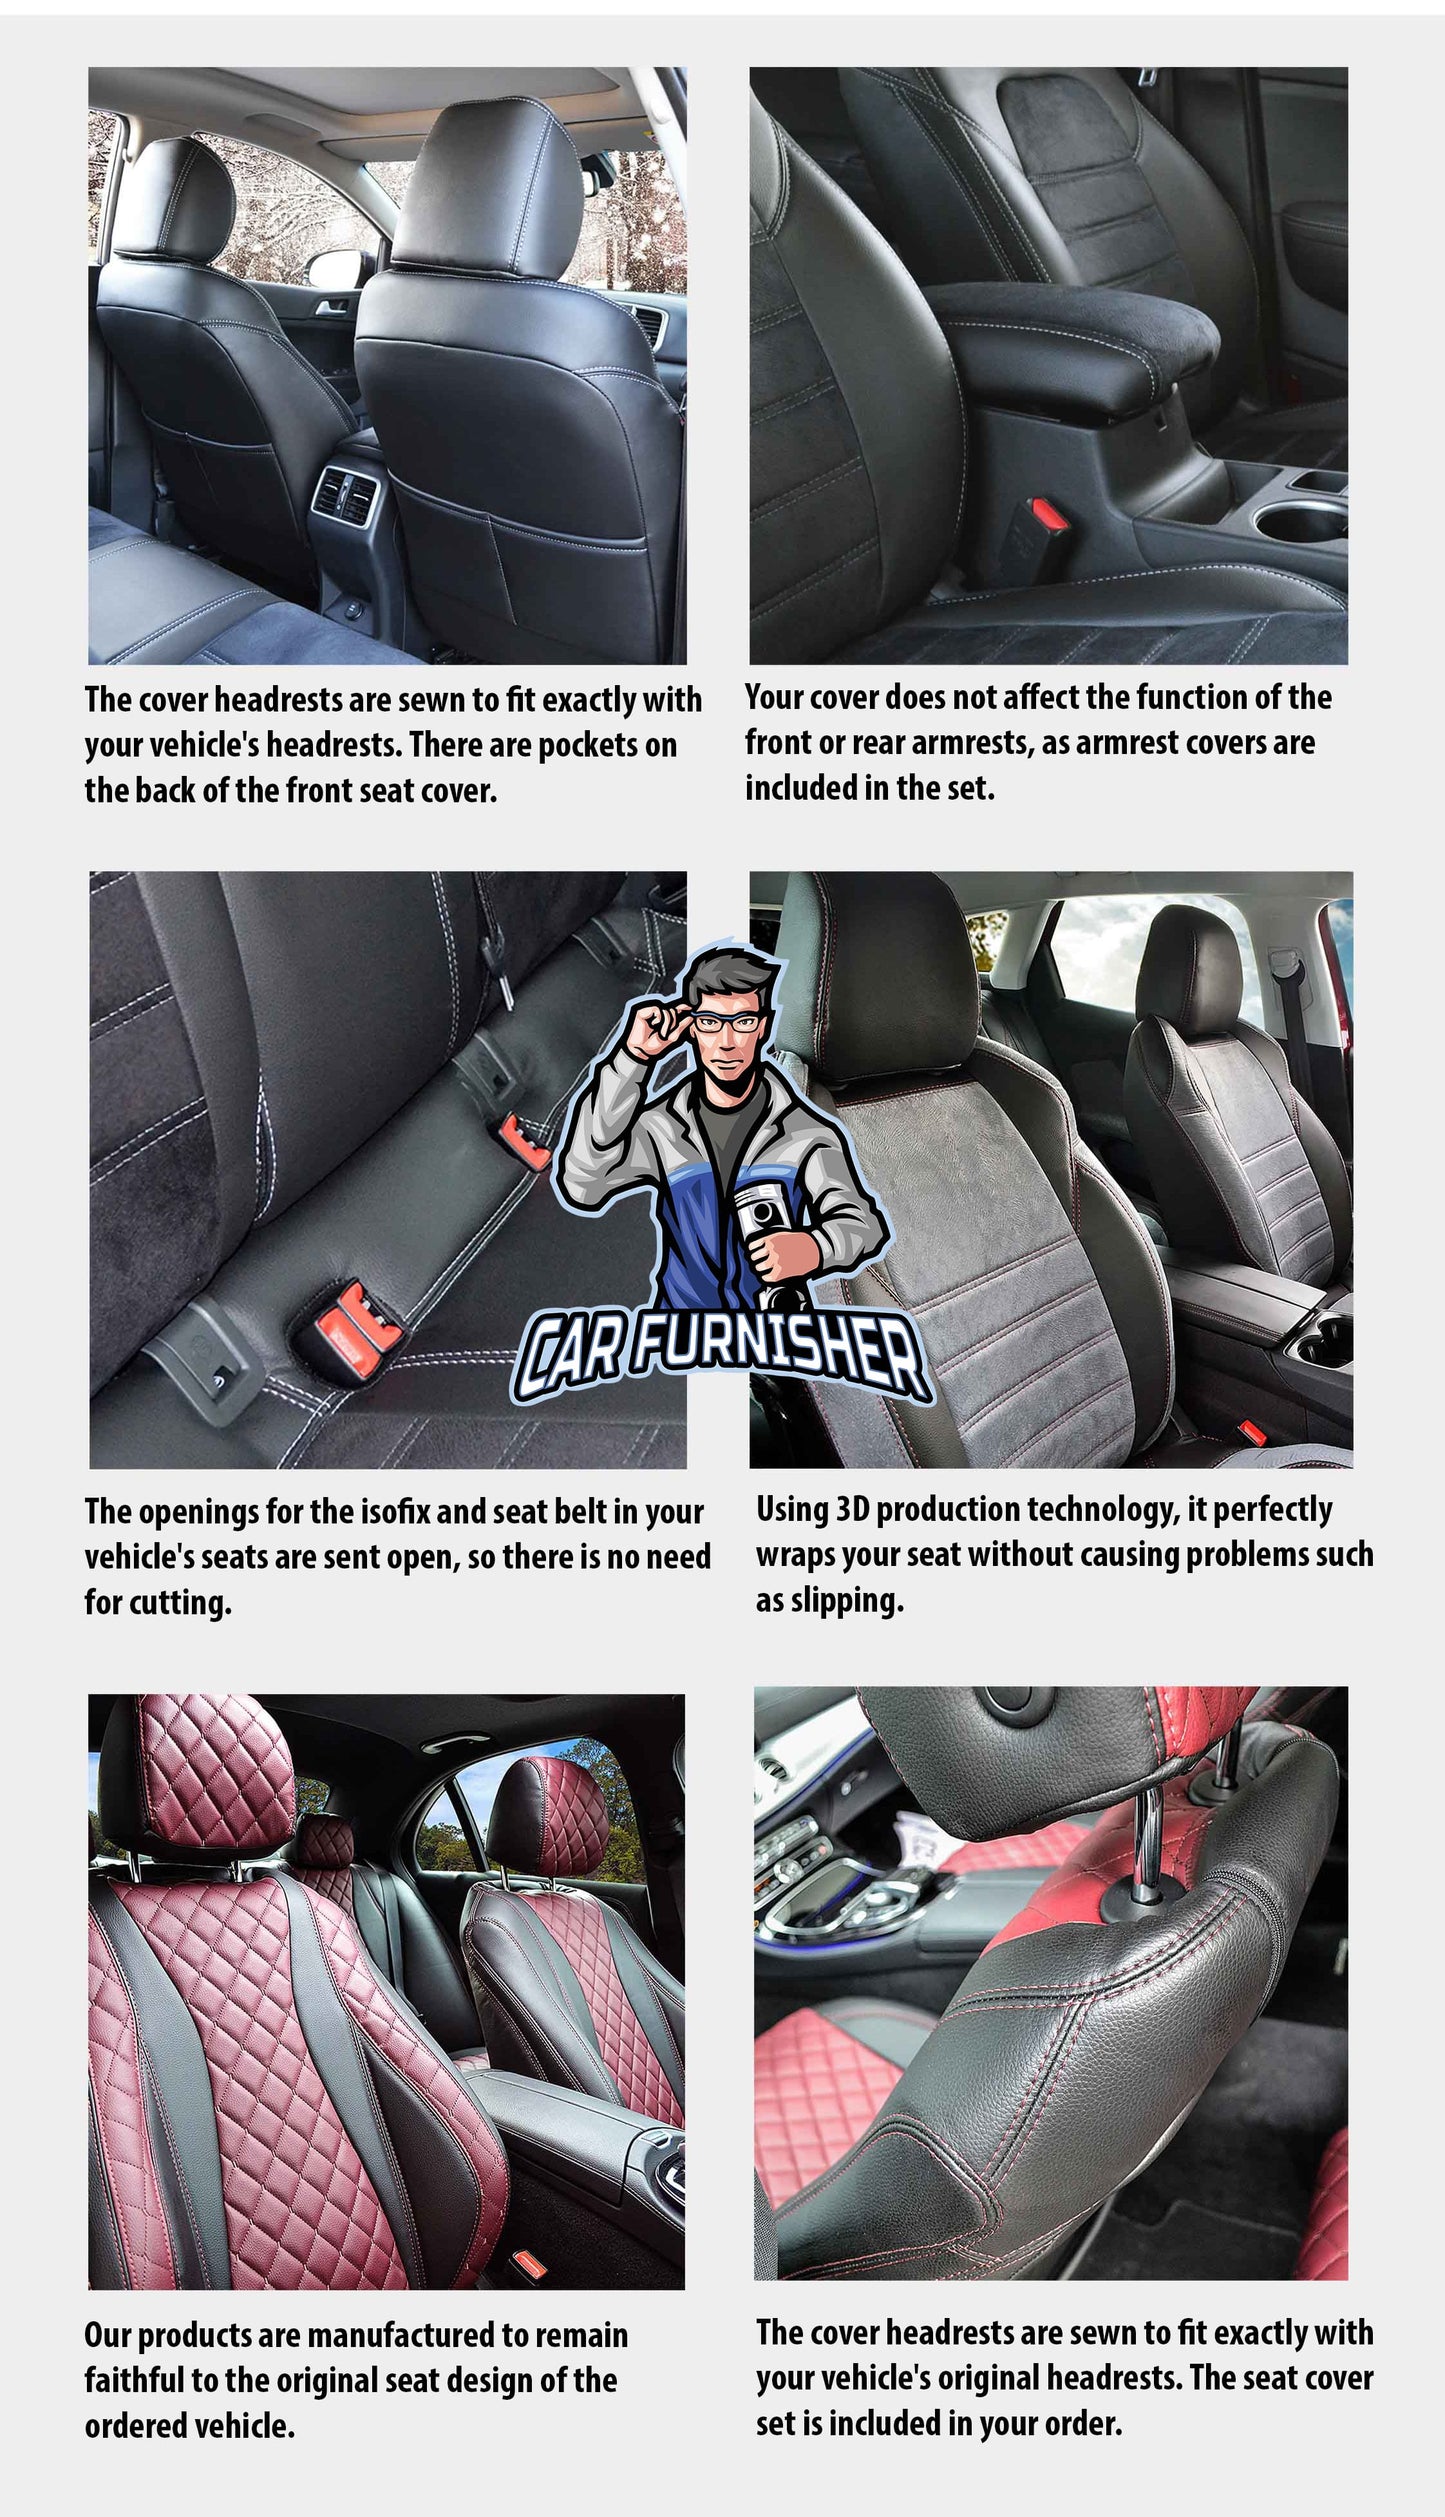 Tata Xenon Seat Covers Istanbul Leather Design Burgundy Leather